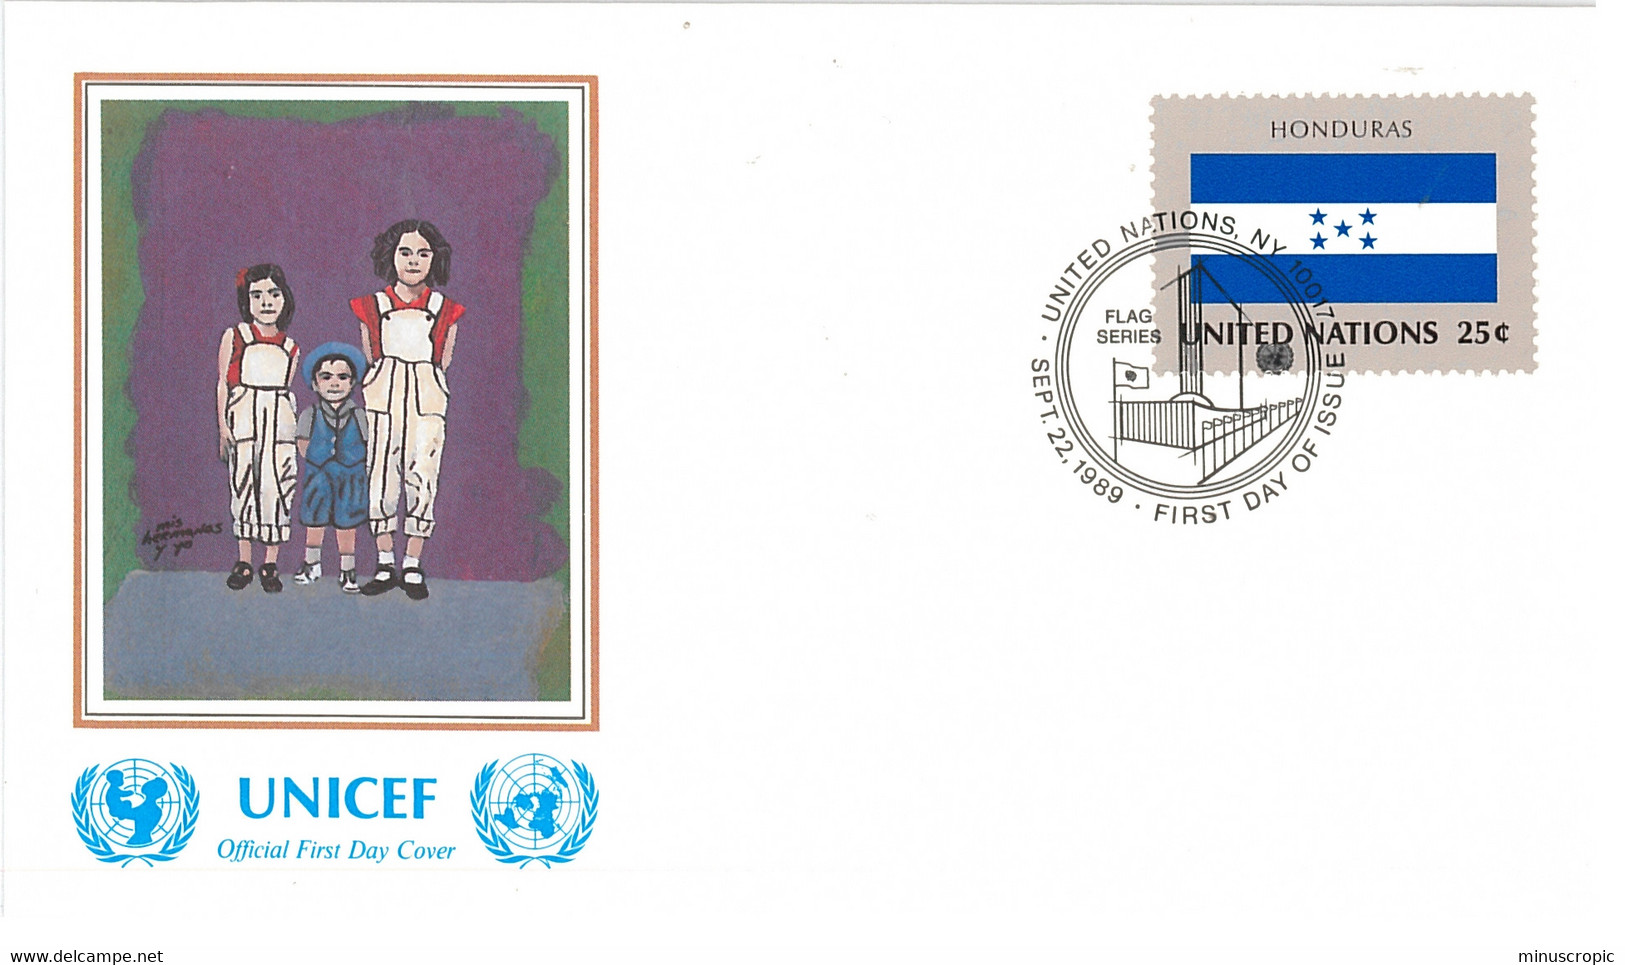 Enveloppe FDC United Nations - UNICEF - Flag Series 7/89 - Honduras - 1989 - Covers & Documents